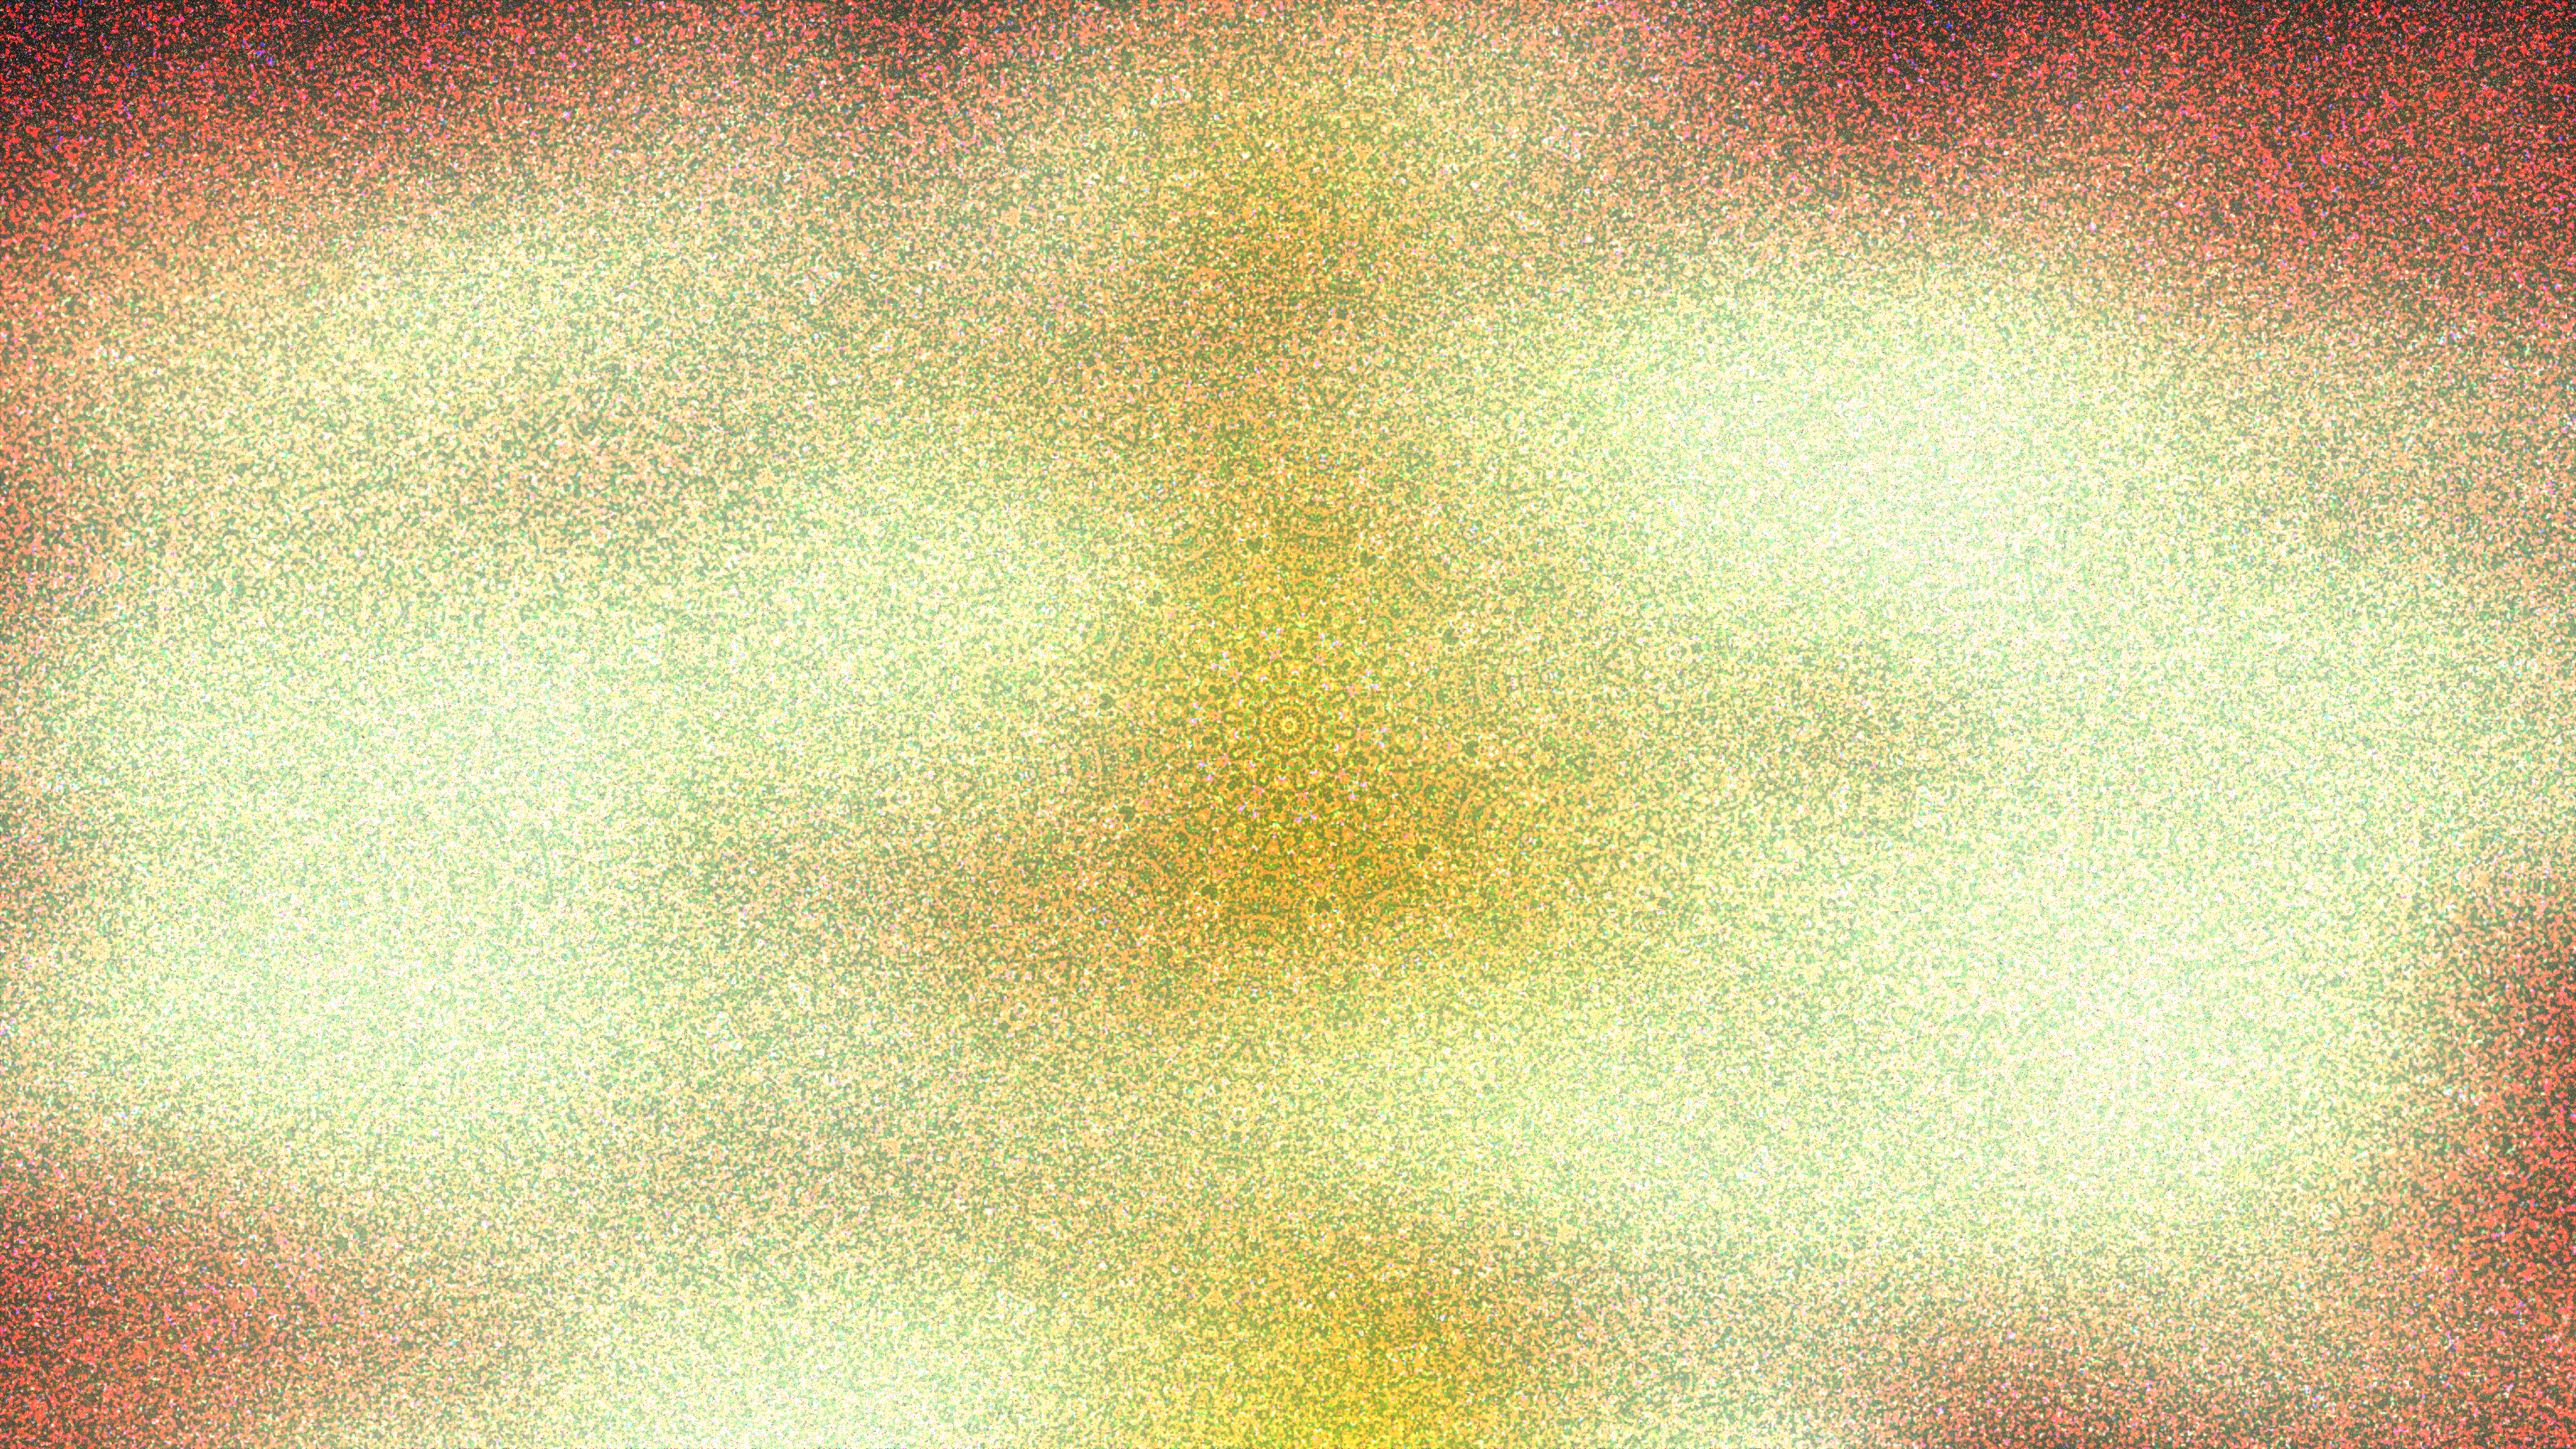 General 3840x2160 fractal bright background noise